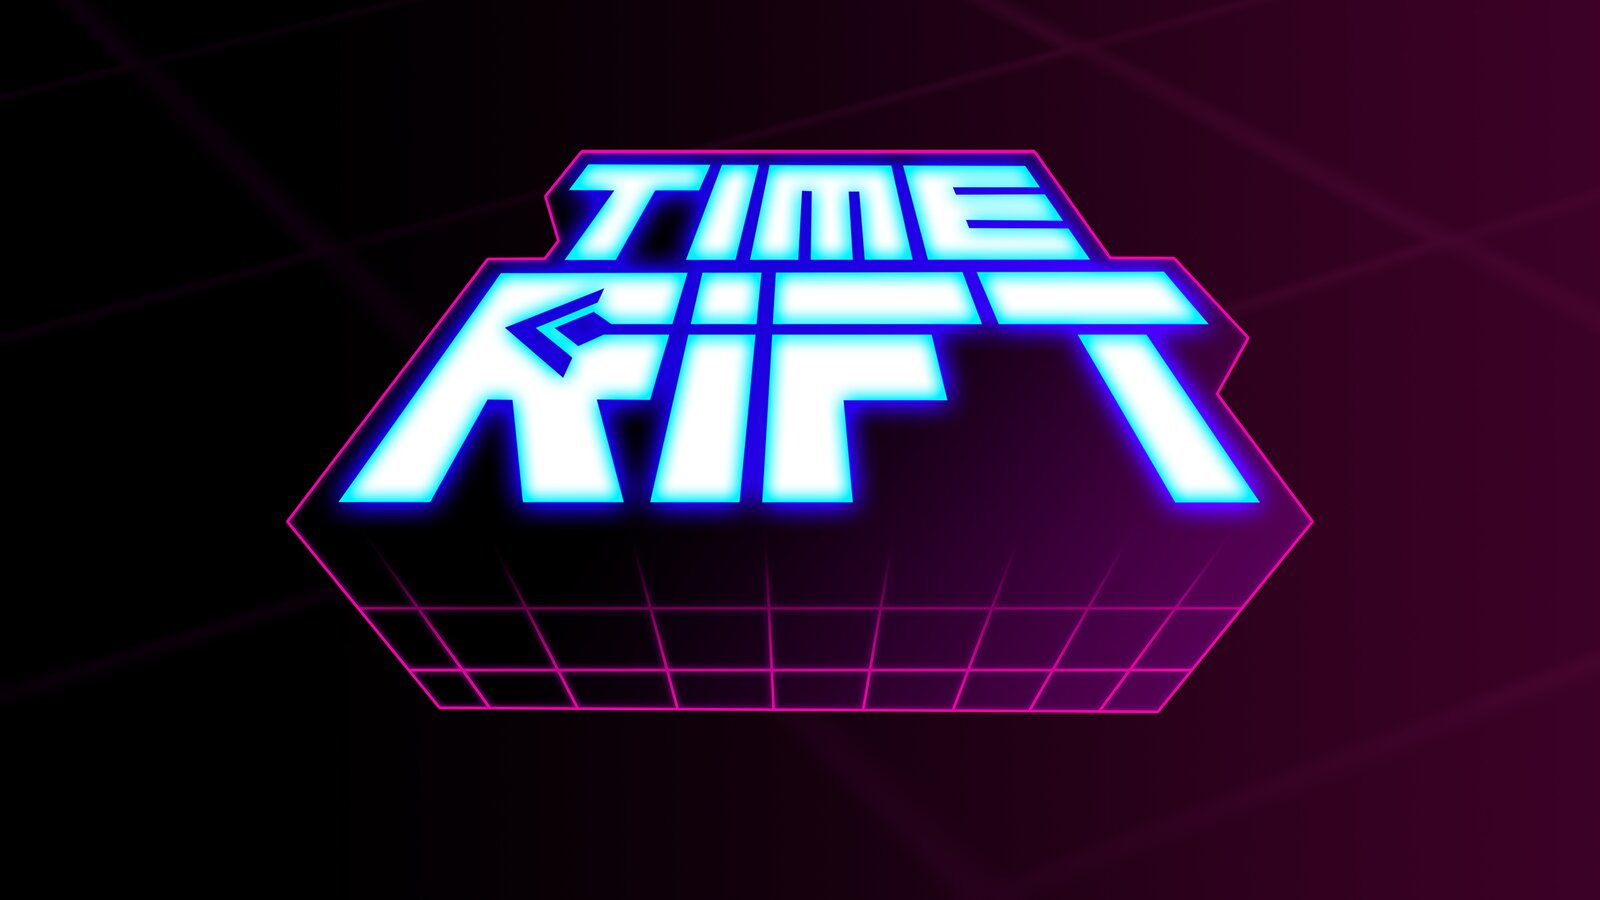 Time Rift: Escape From Speedjail